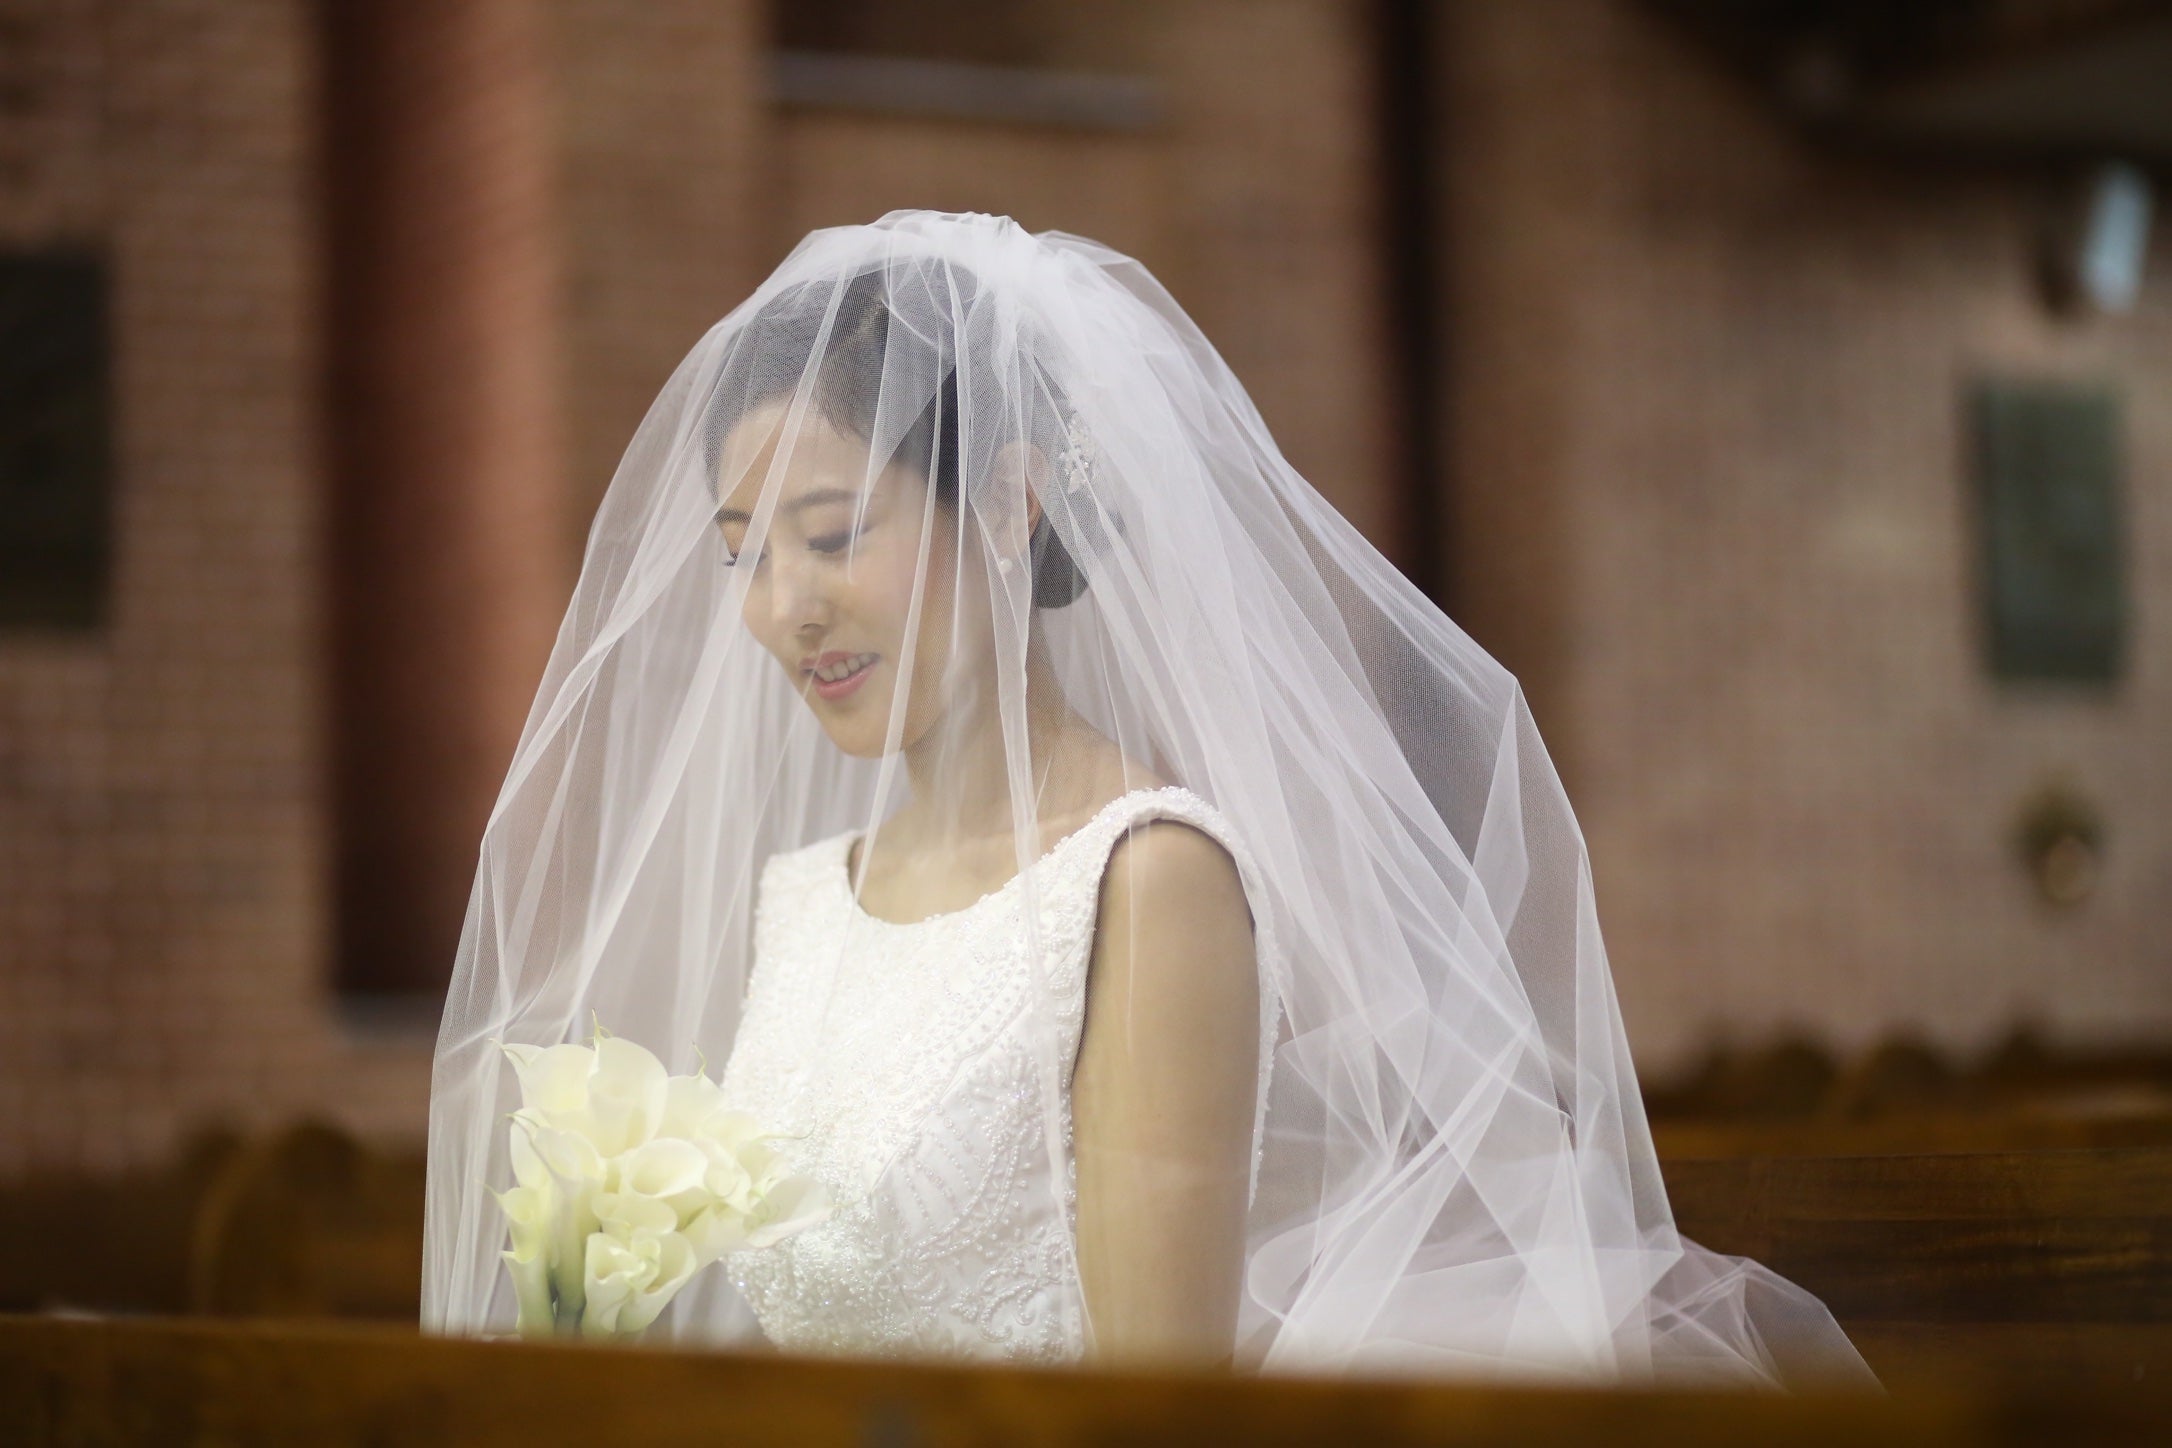 woman smiling in white wedding dress